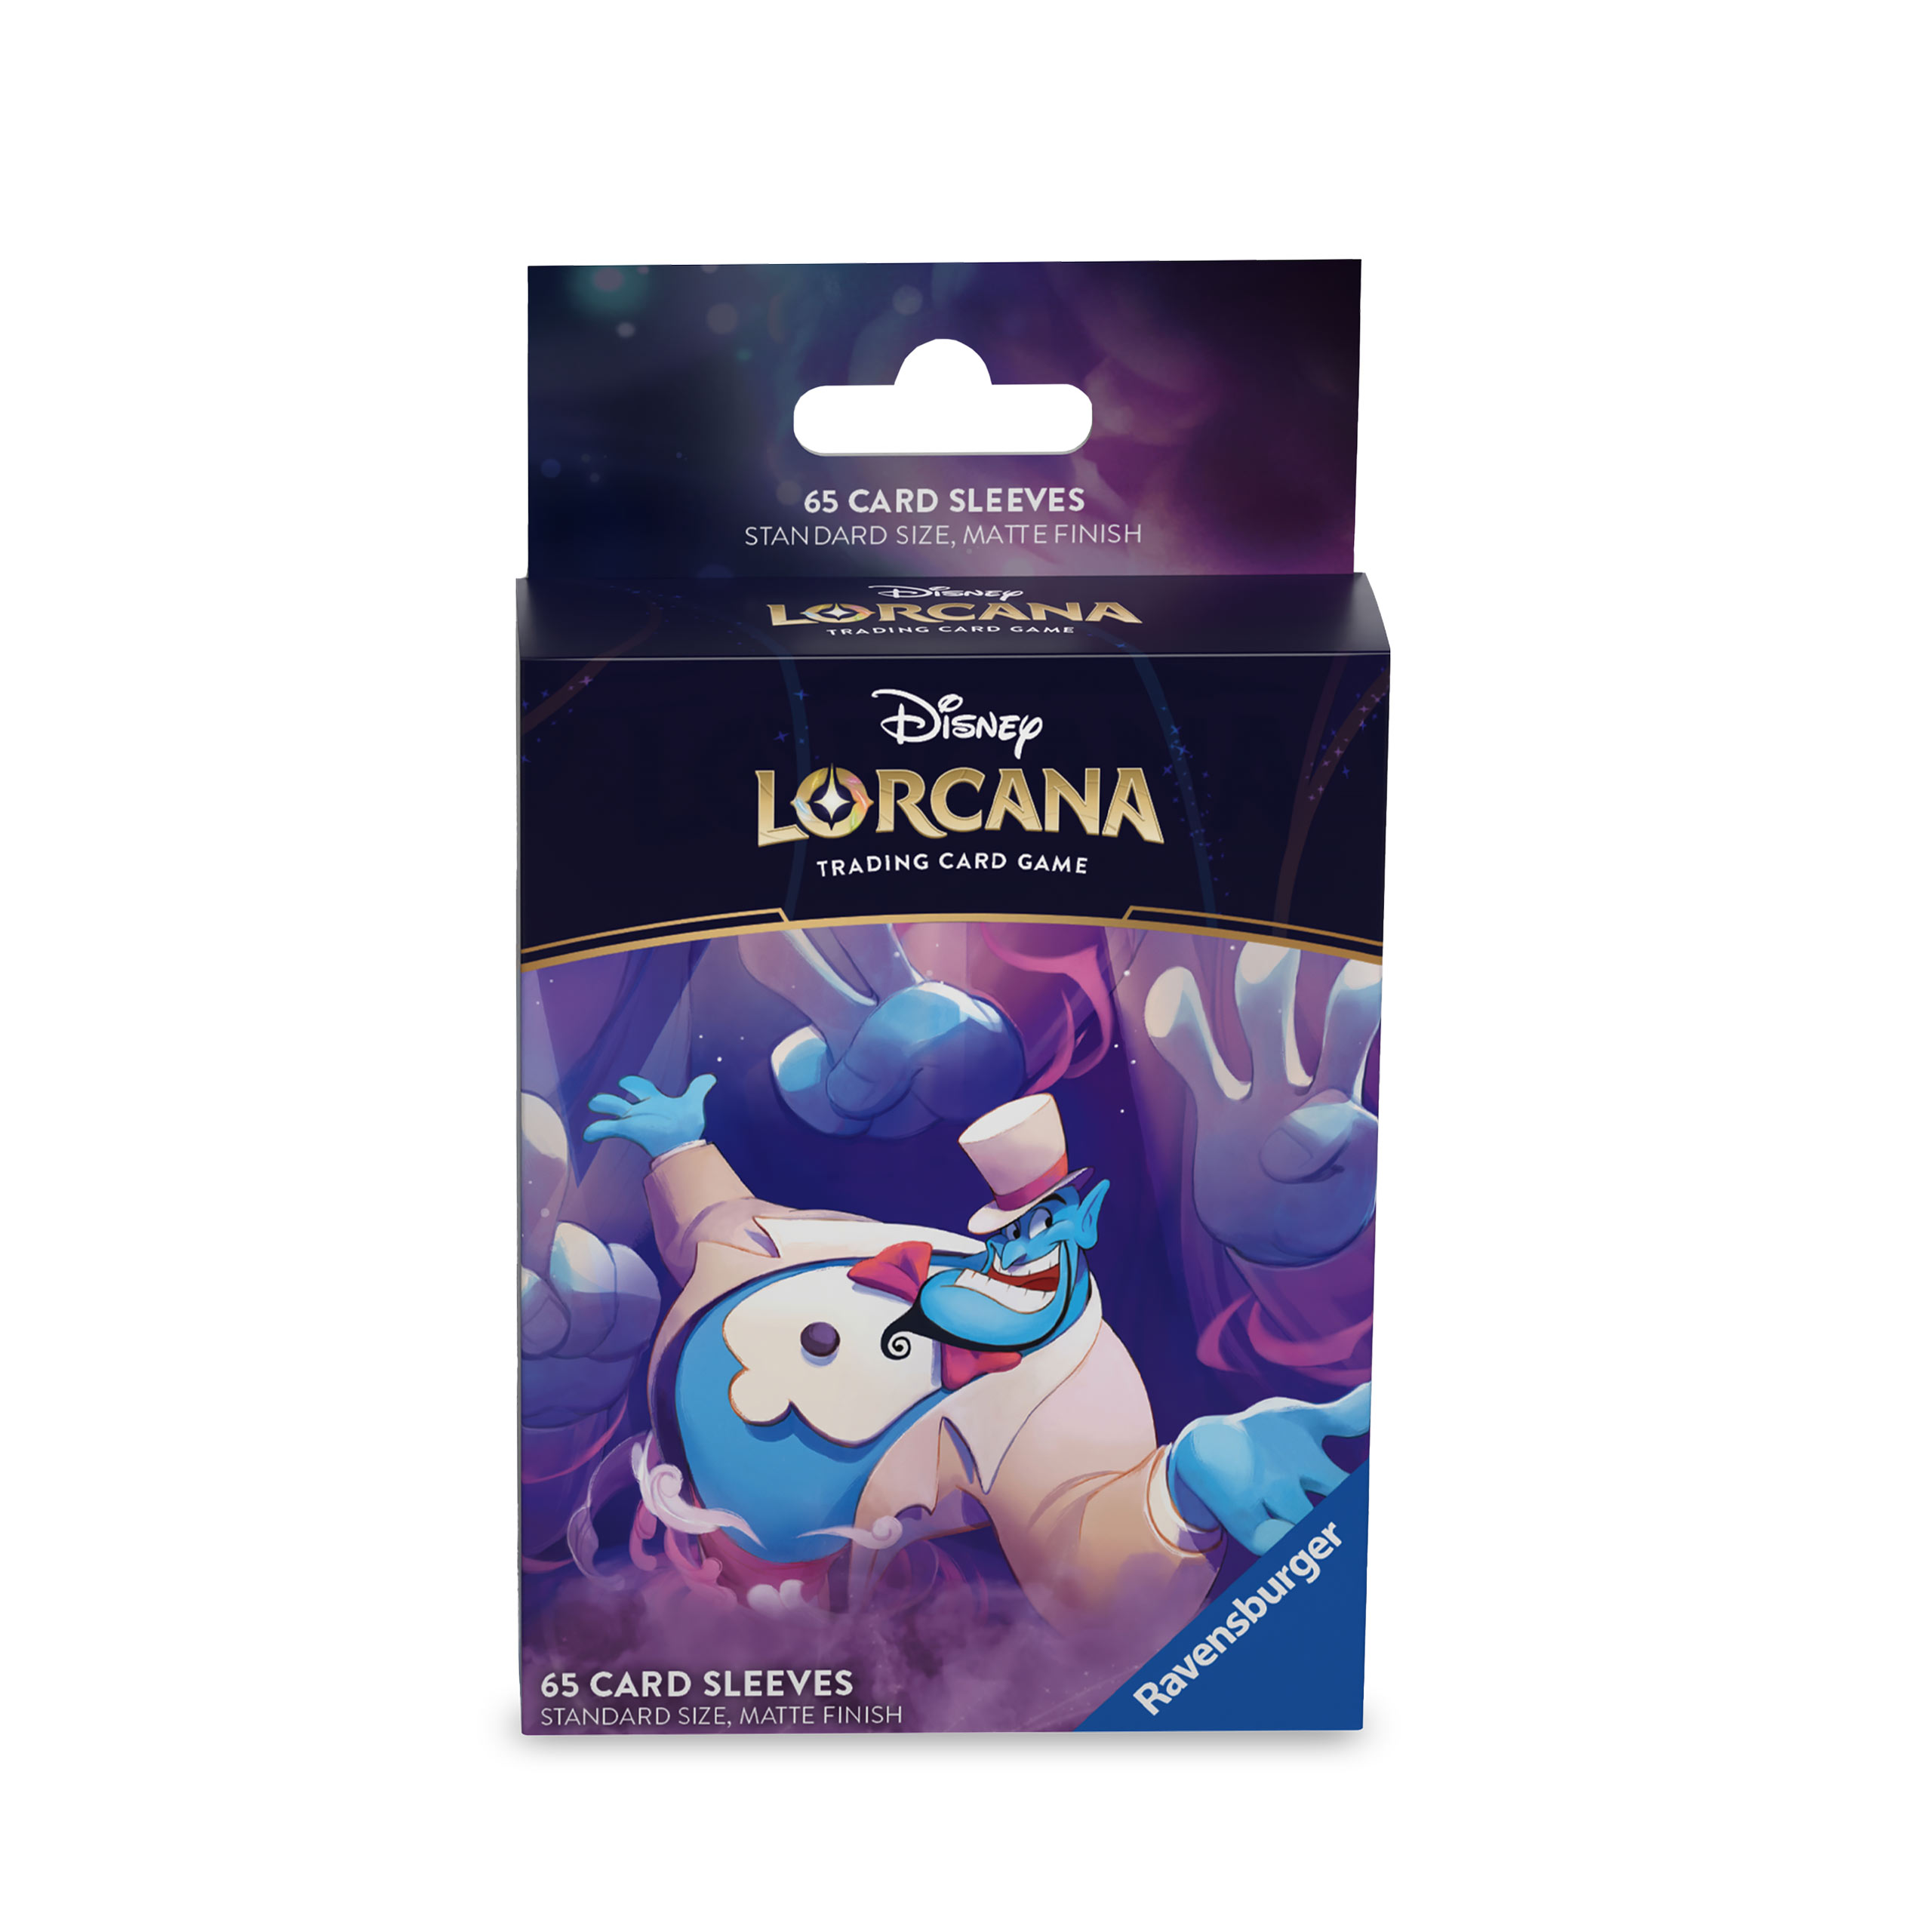 Disney Lorcana Genie Card Sleeves - Ursula's Return Trading Card Game